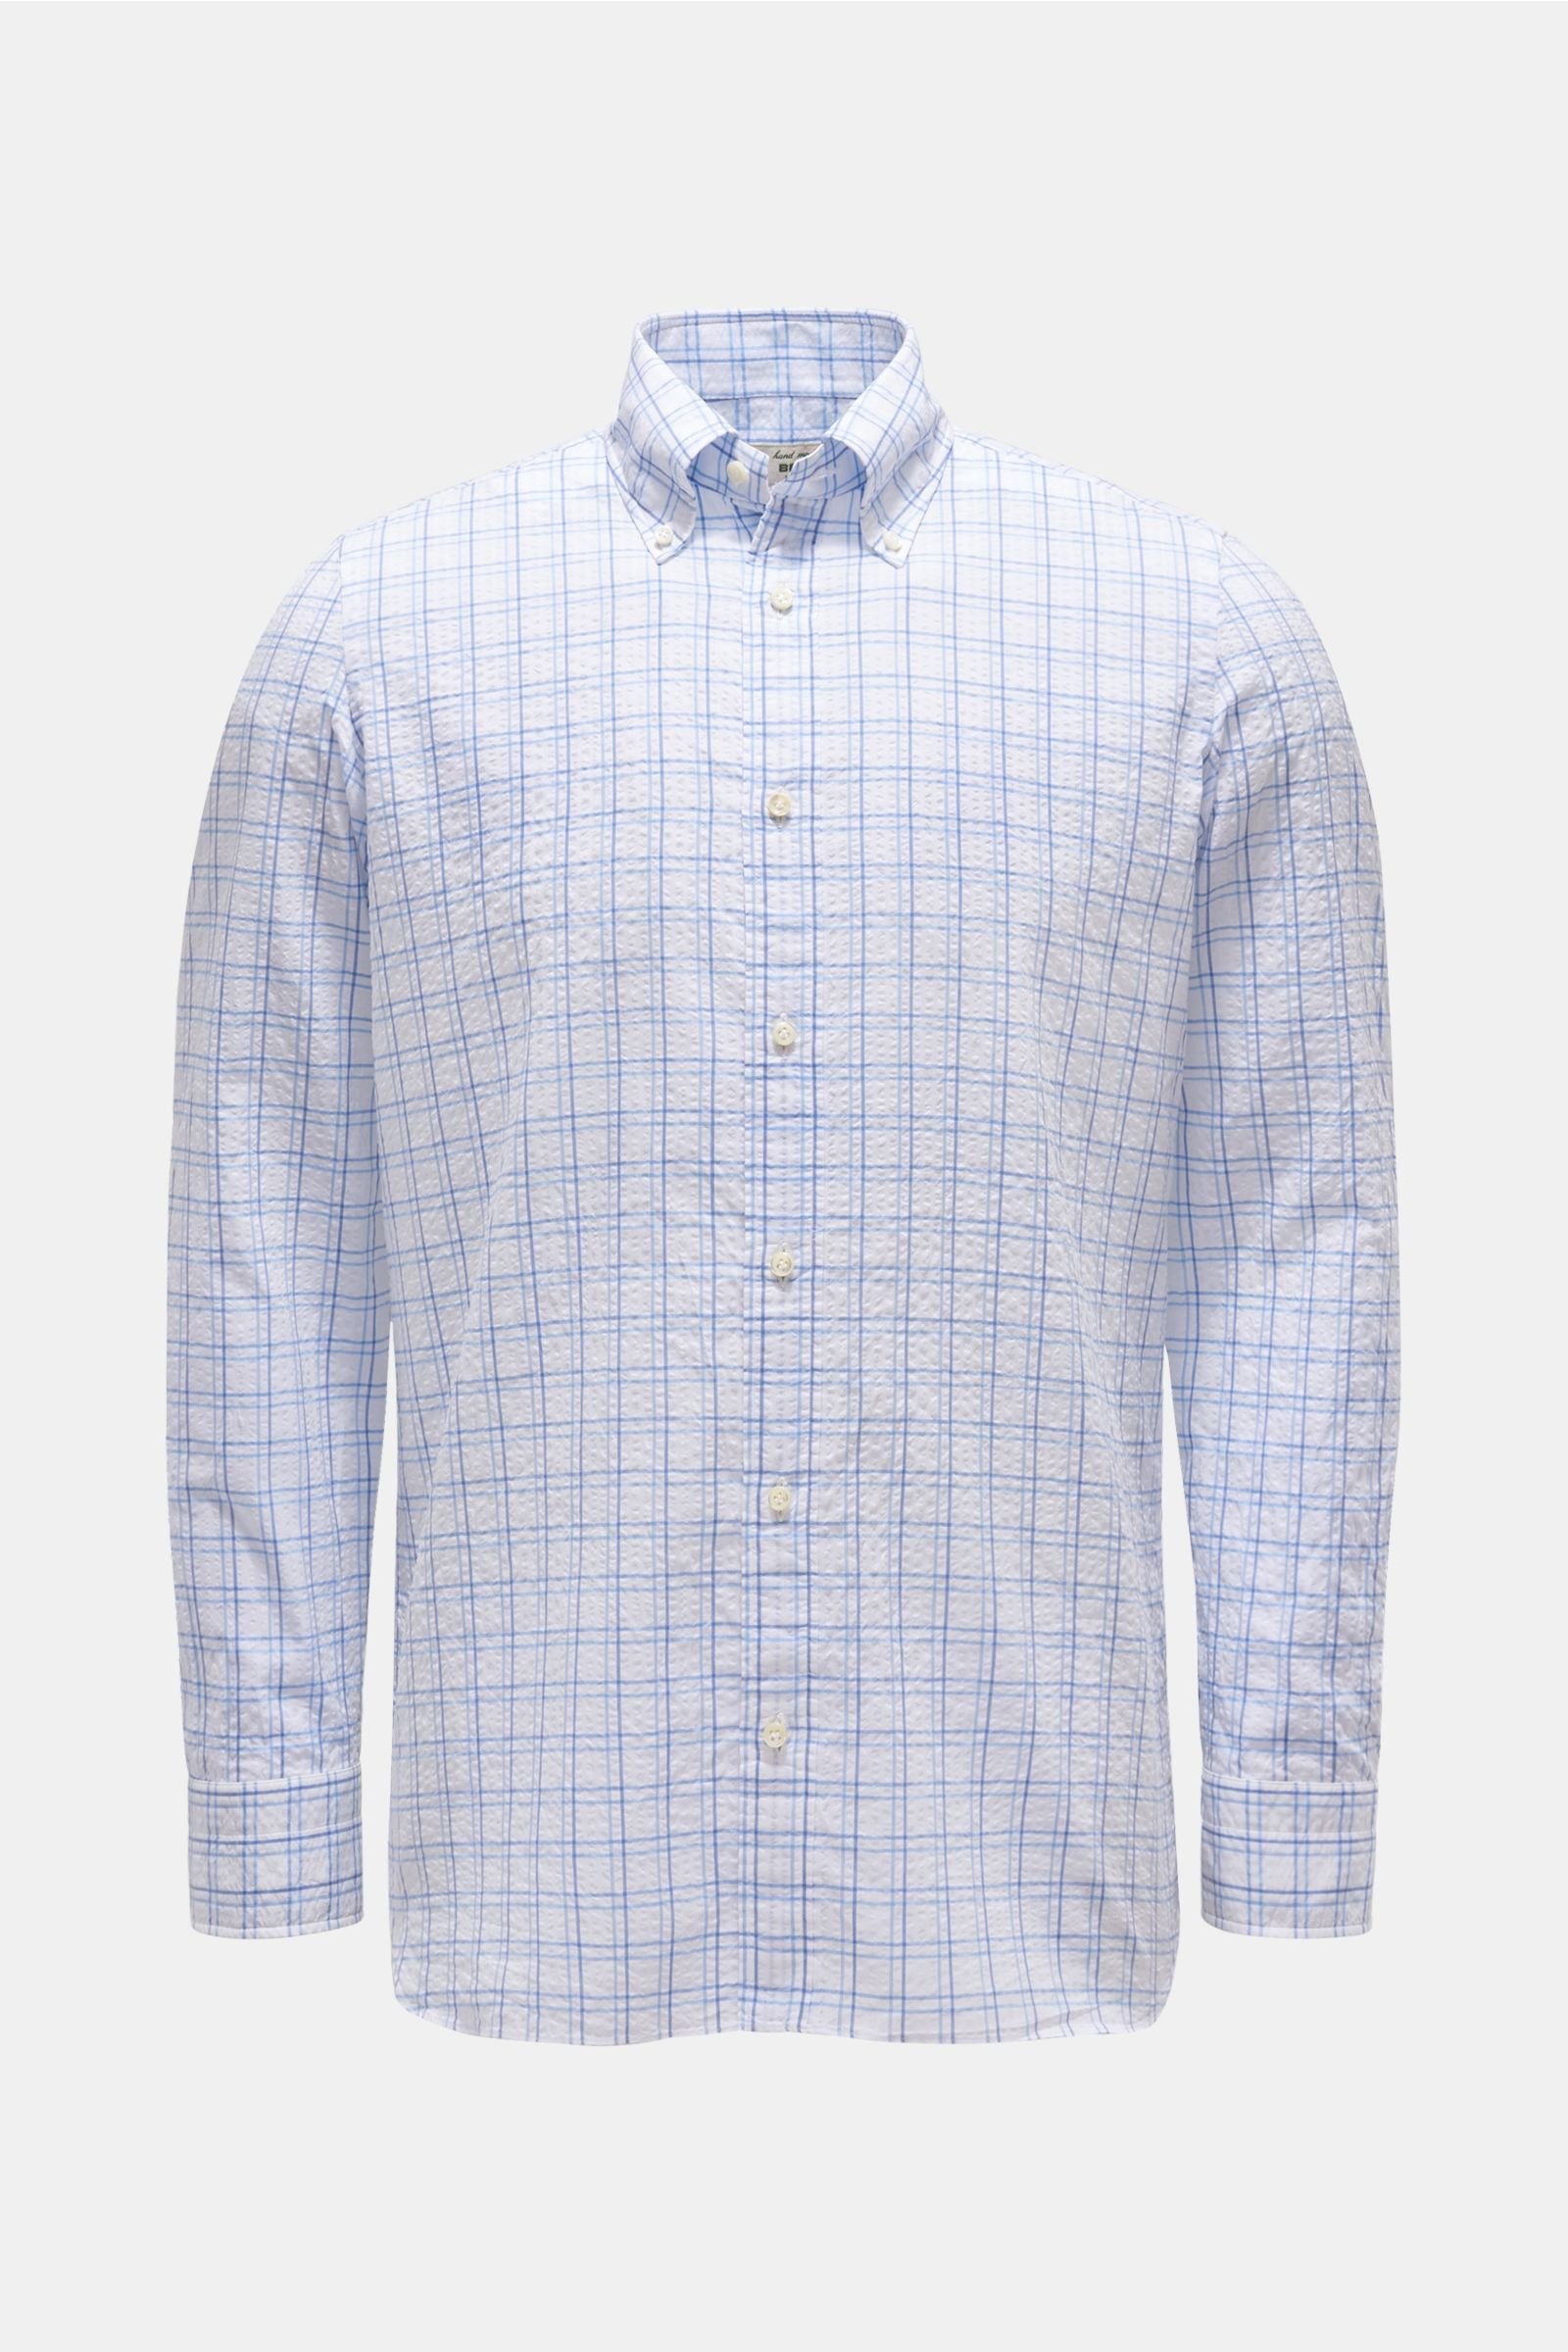 Seersucker shirt button-down collar smoky blue/white checked